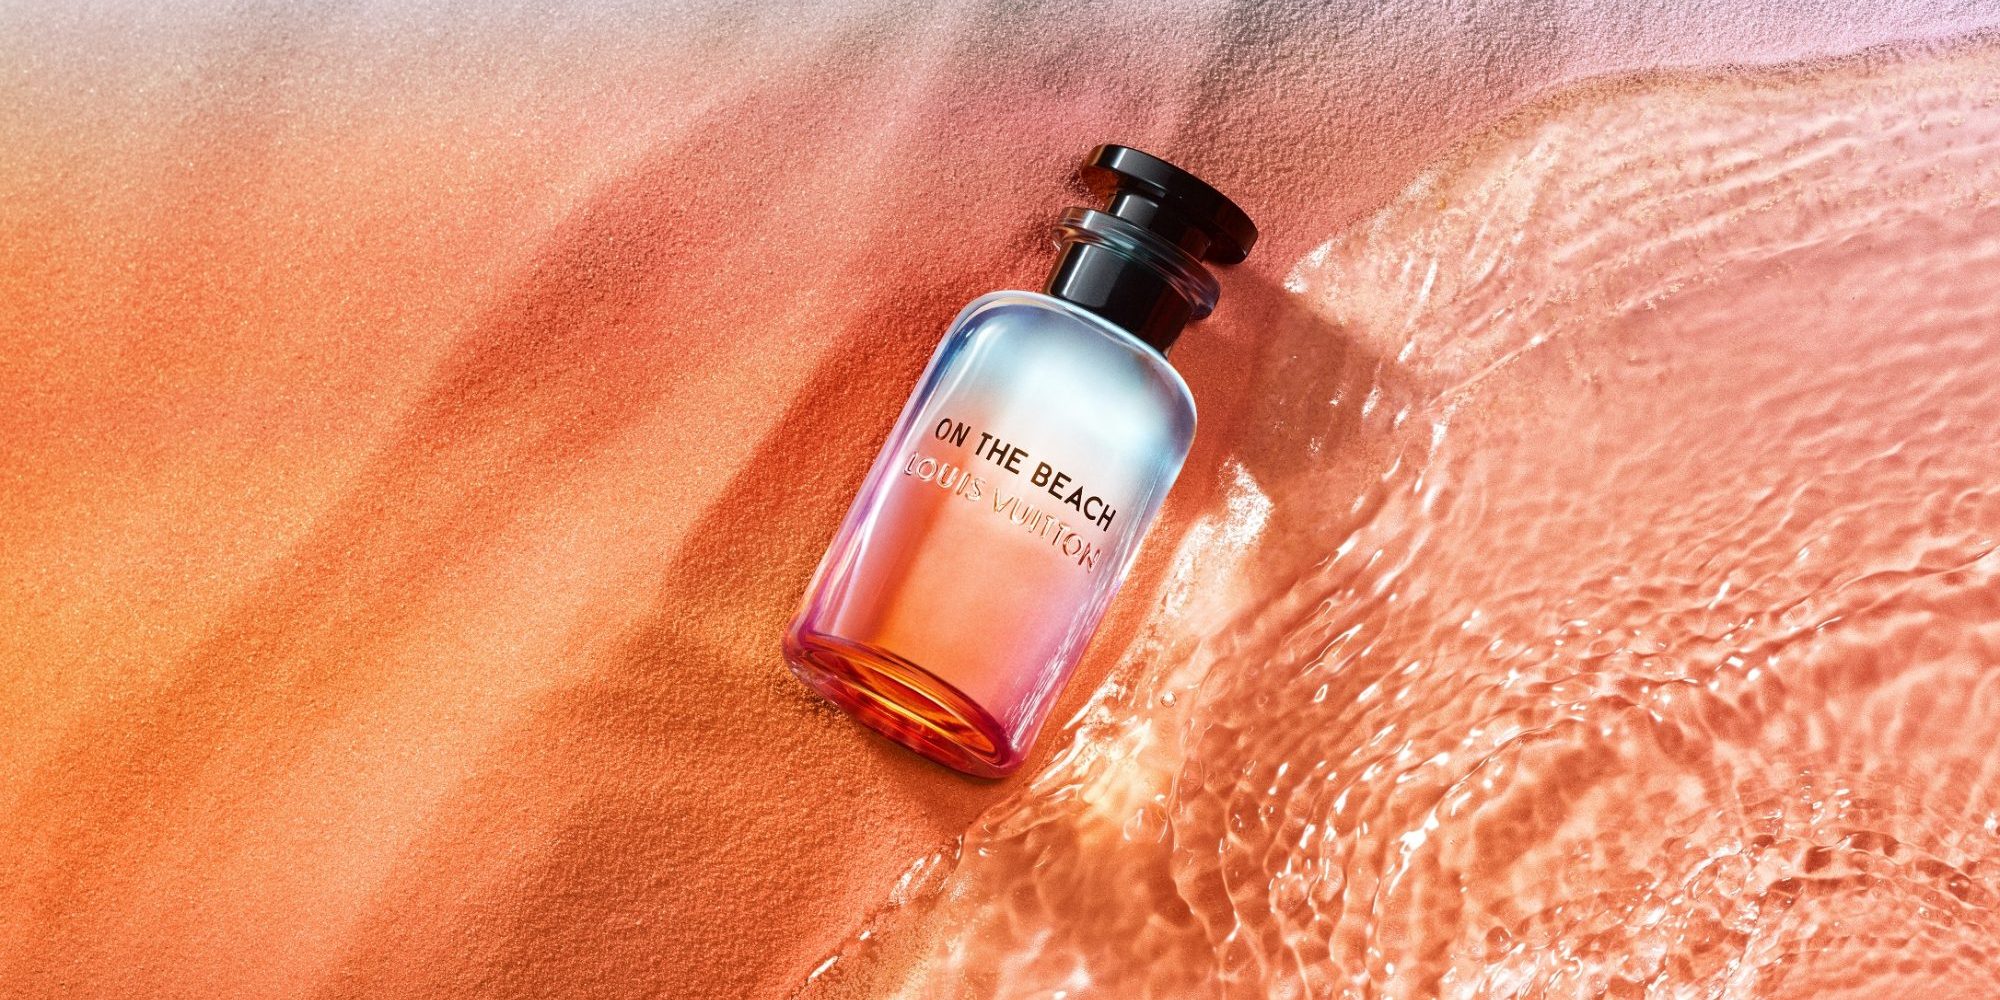 On the beach: Το νέο άρωμα του οίκου Louis Vuitton μυρίζει καλοκαίρι